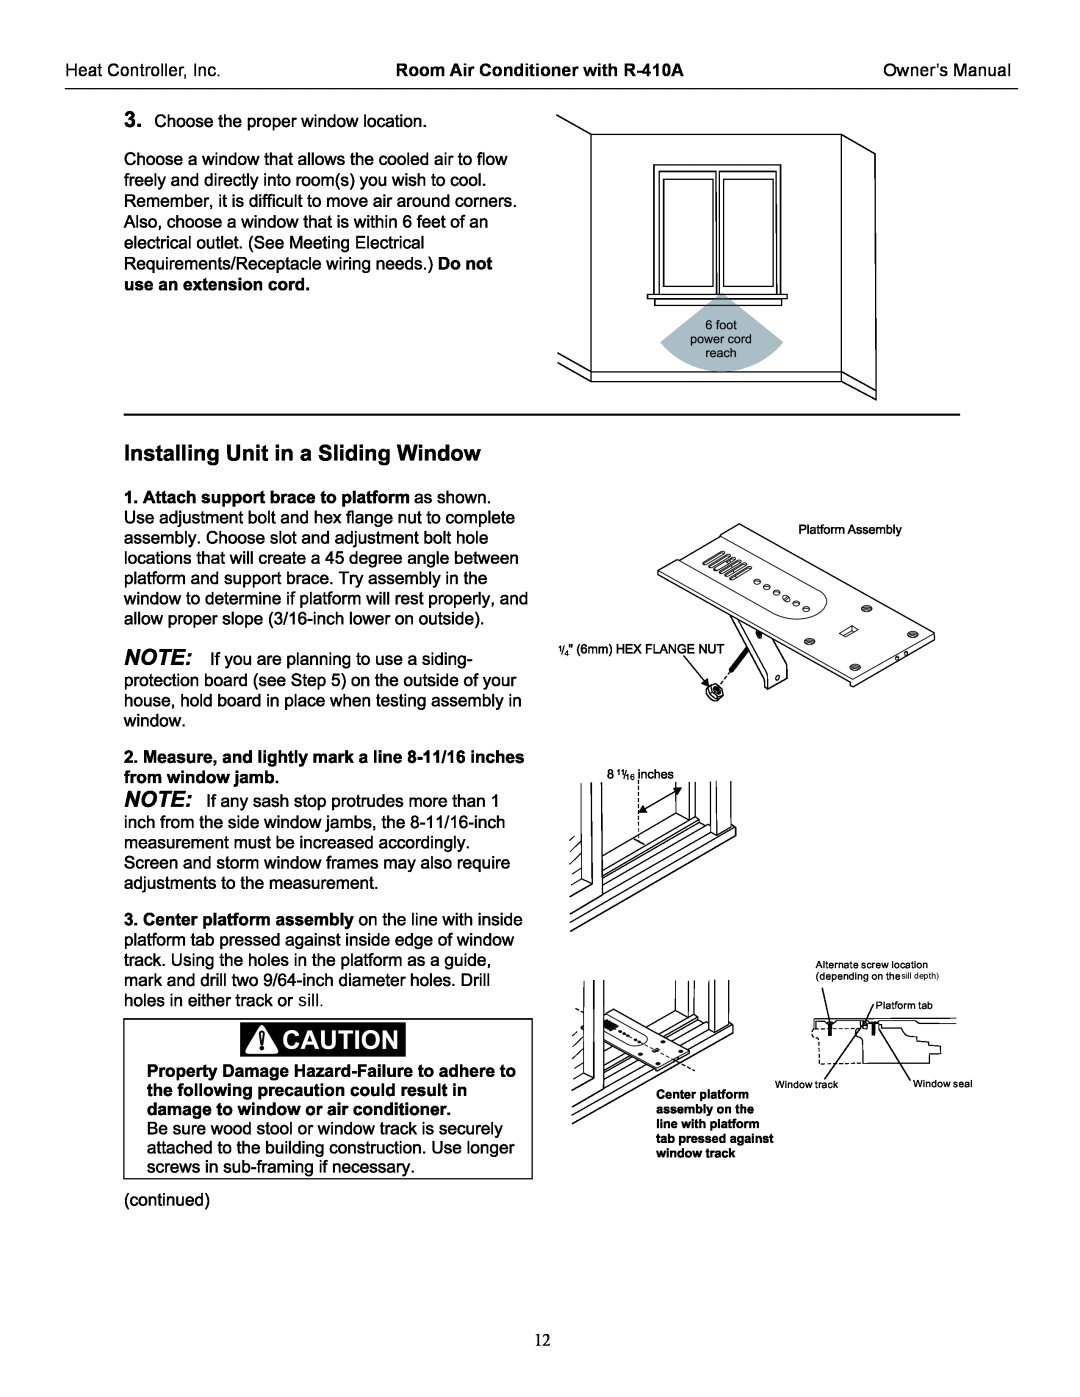 Heat Controller CD-121J Room Air Conditioner with R-410A, Alternatescrewlocation, Platformtab, Windowtrack, Windowseal 